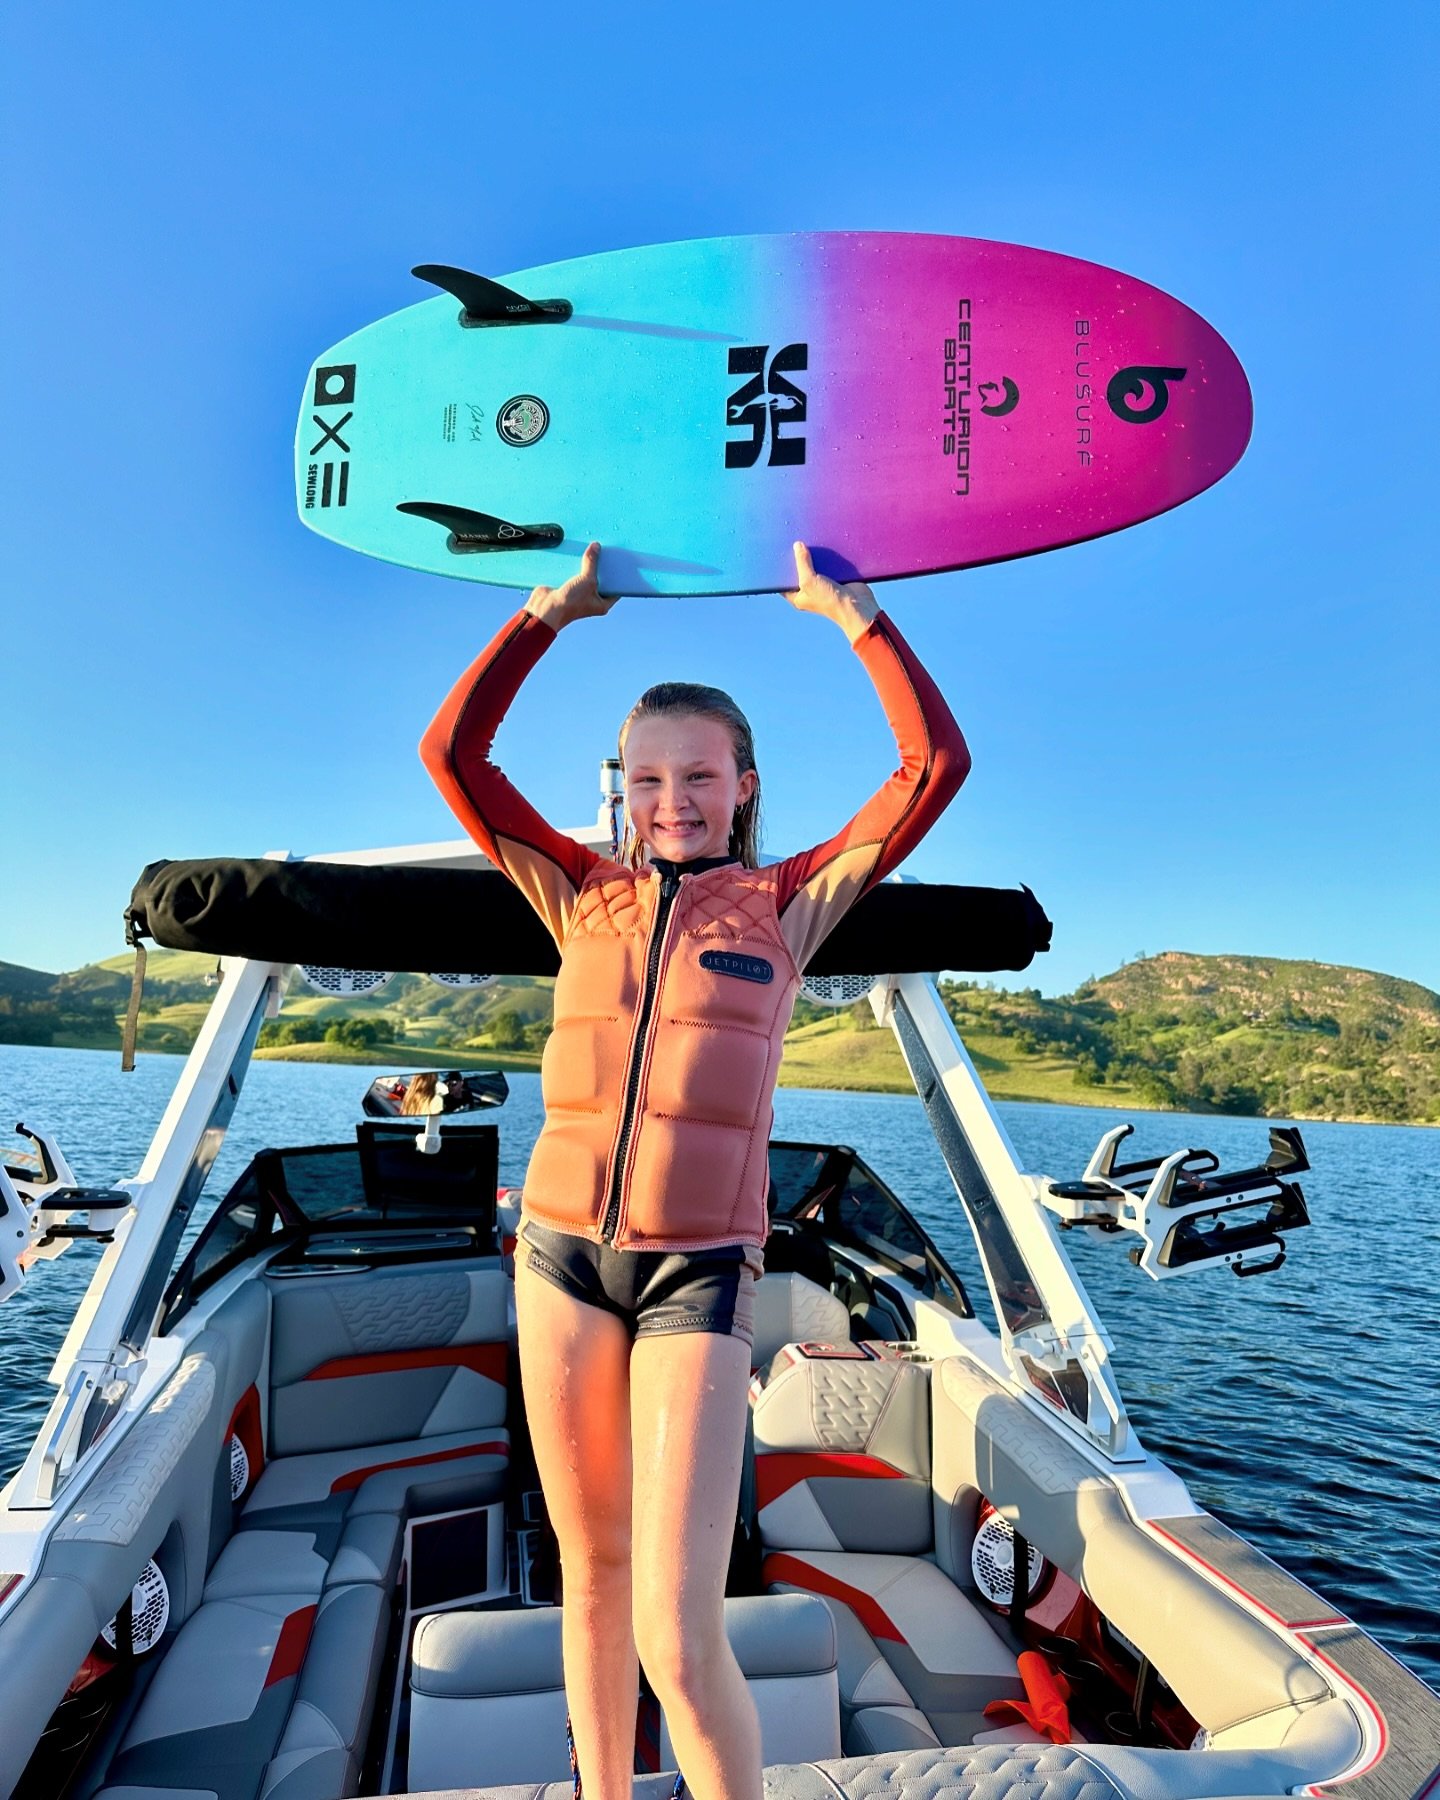 🩵🩷 @blusurfwake @centurionboats 

#beyou #athlete #surfergirl #wakesurf #blusurf #surfboard #centurionboats #ri245 #surfboat #lakelife #family #happy #wakesurfpics #livingherbestlife #lifeonthewater #surfing